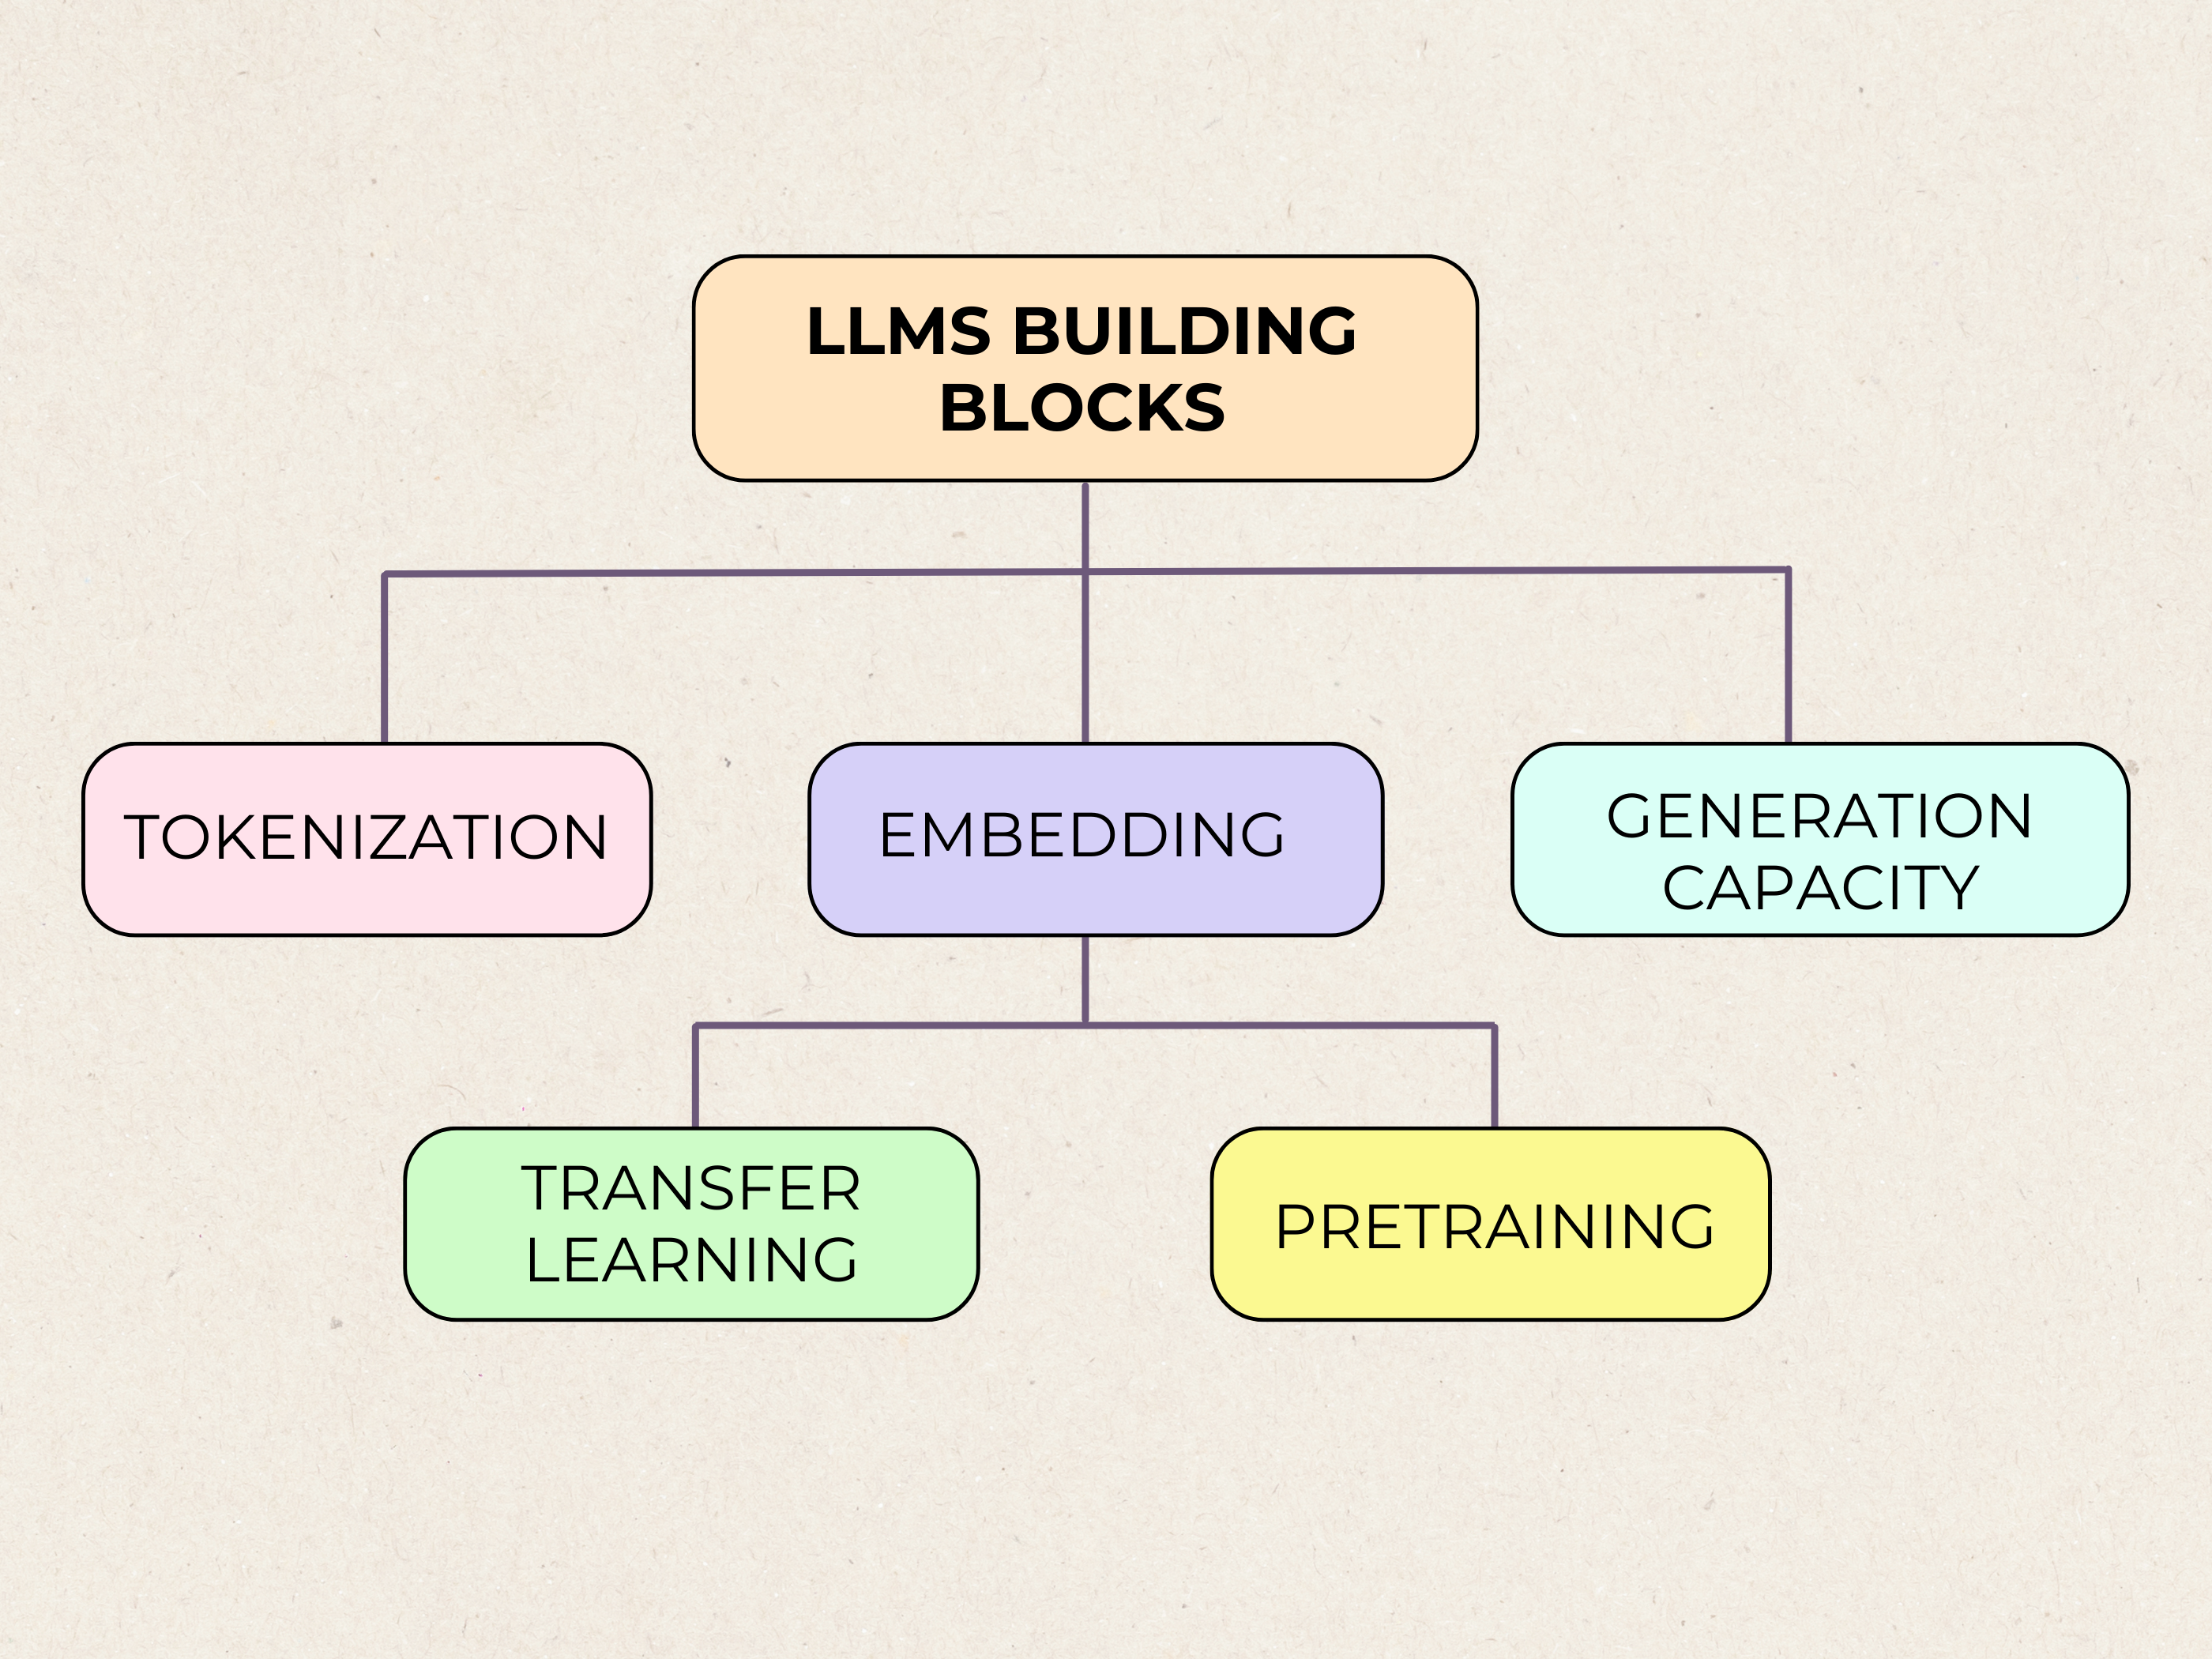 LLMs building blocks